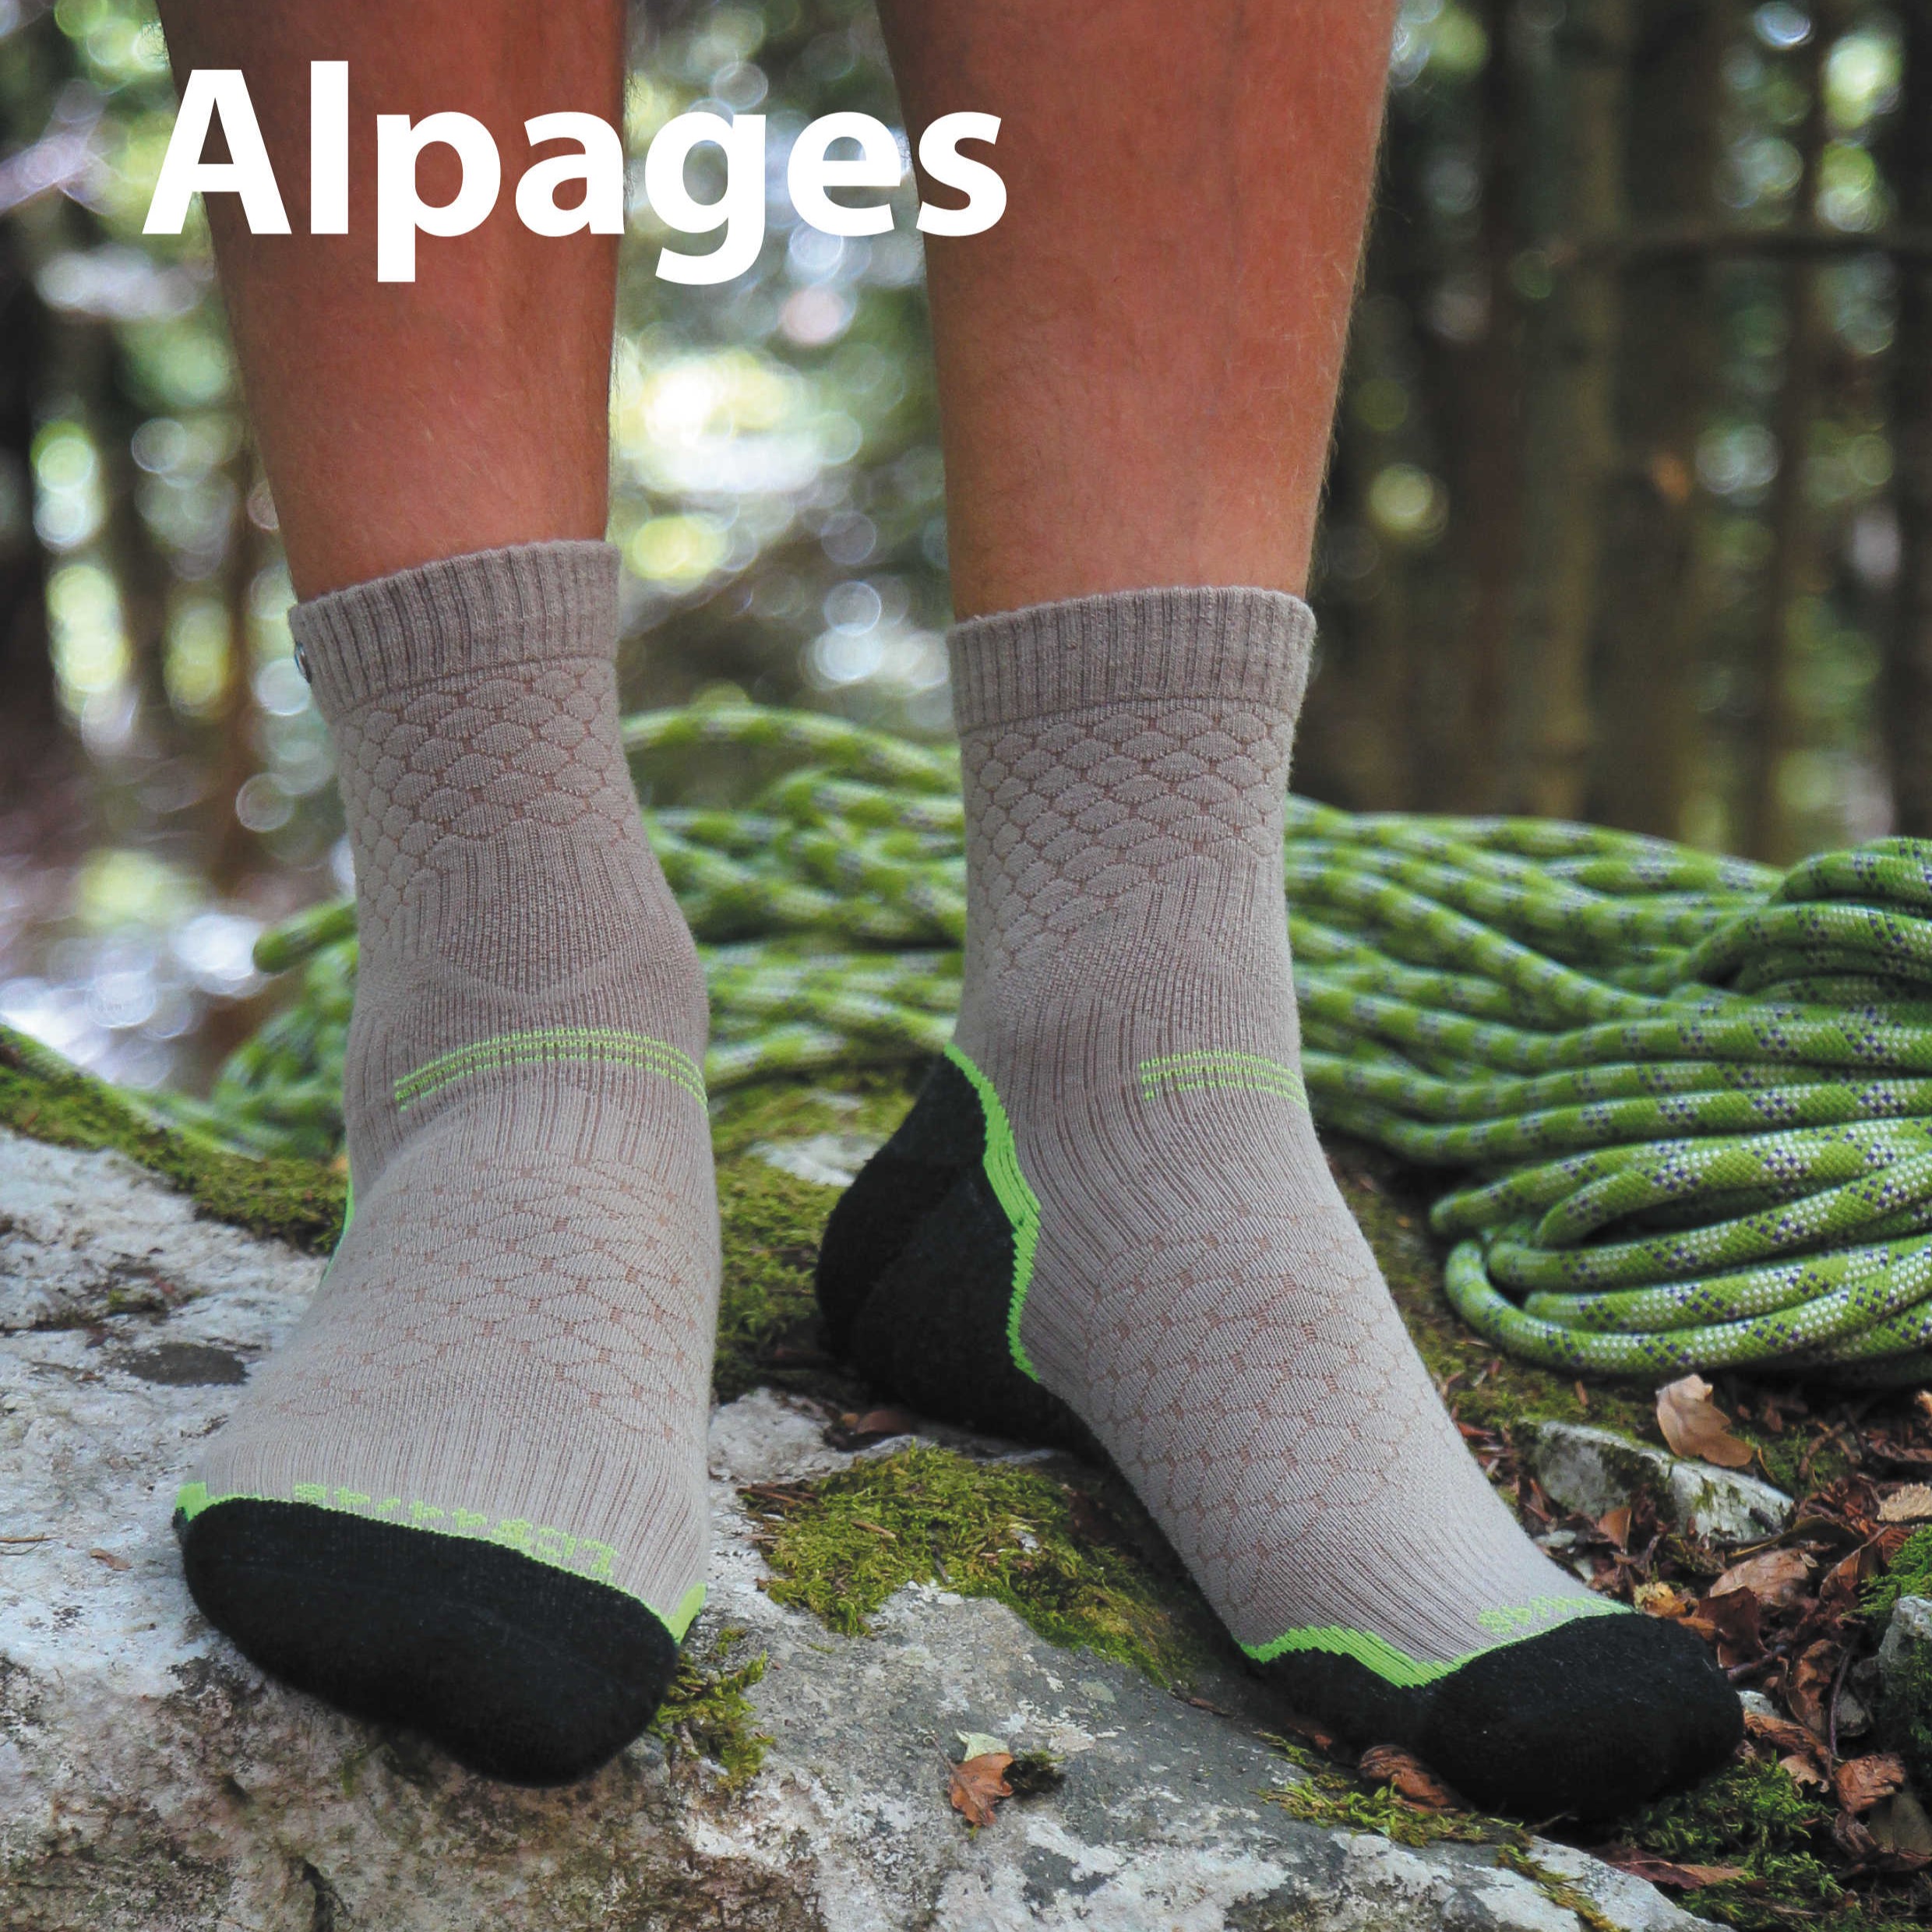 Alpages